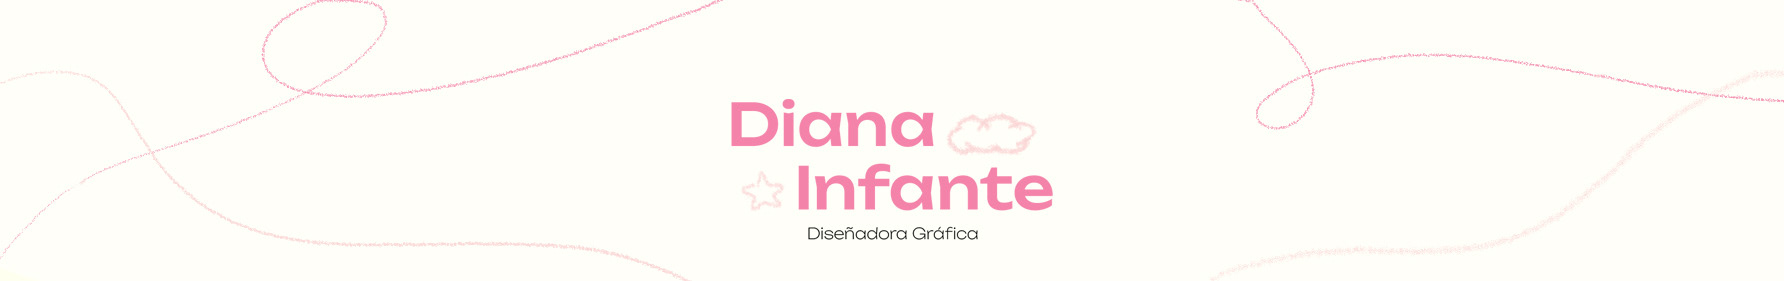 Diana Infante's profile banner